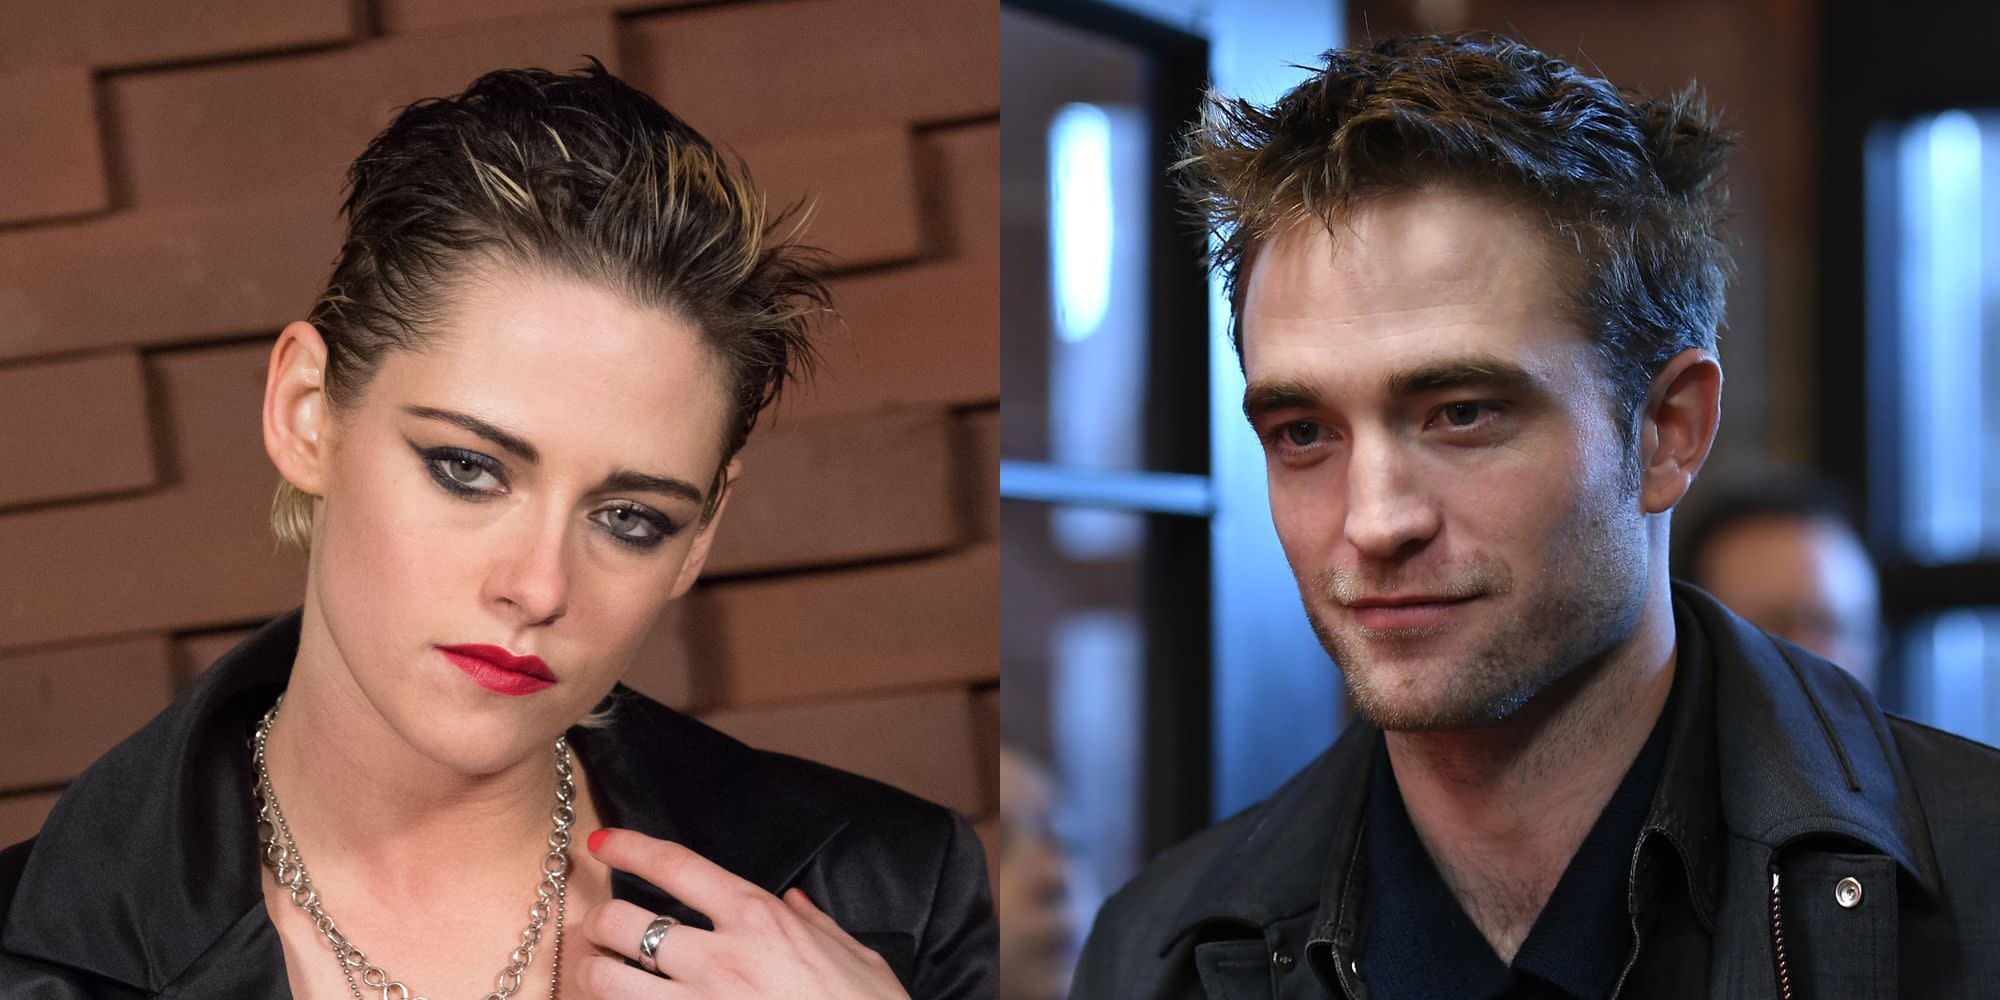 Robert Pattinson & Kristen Stewart At a Bar Rumor